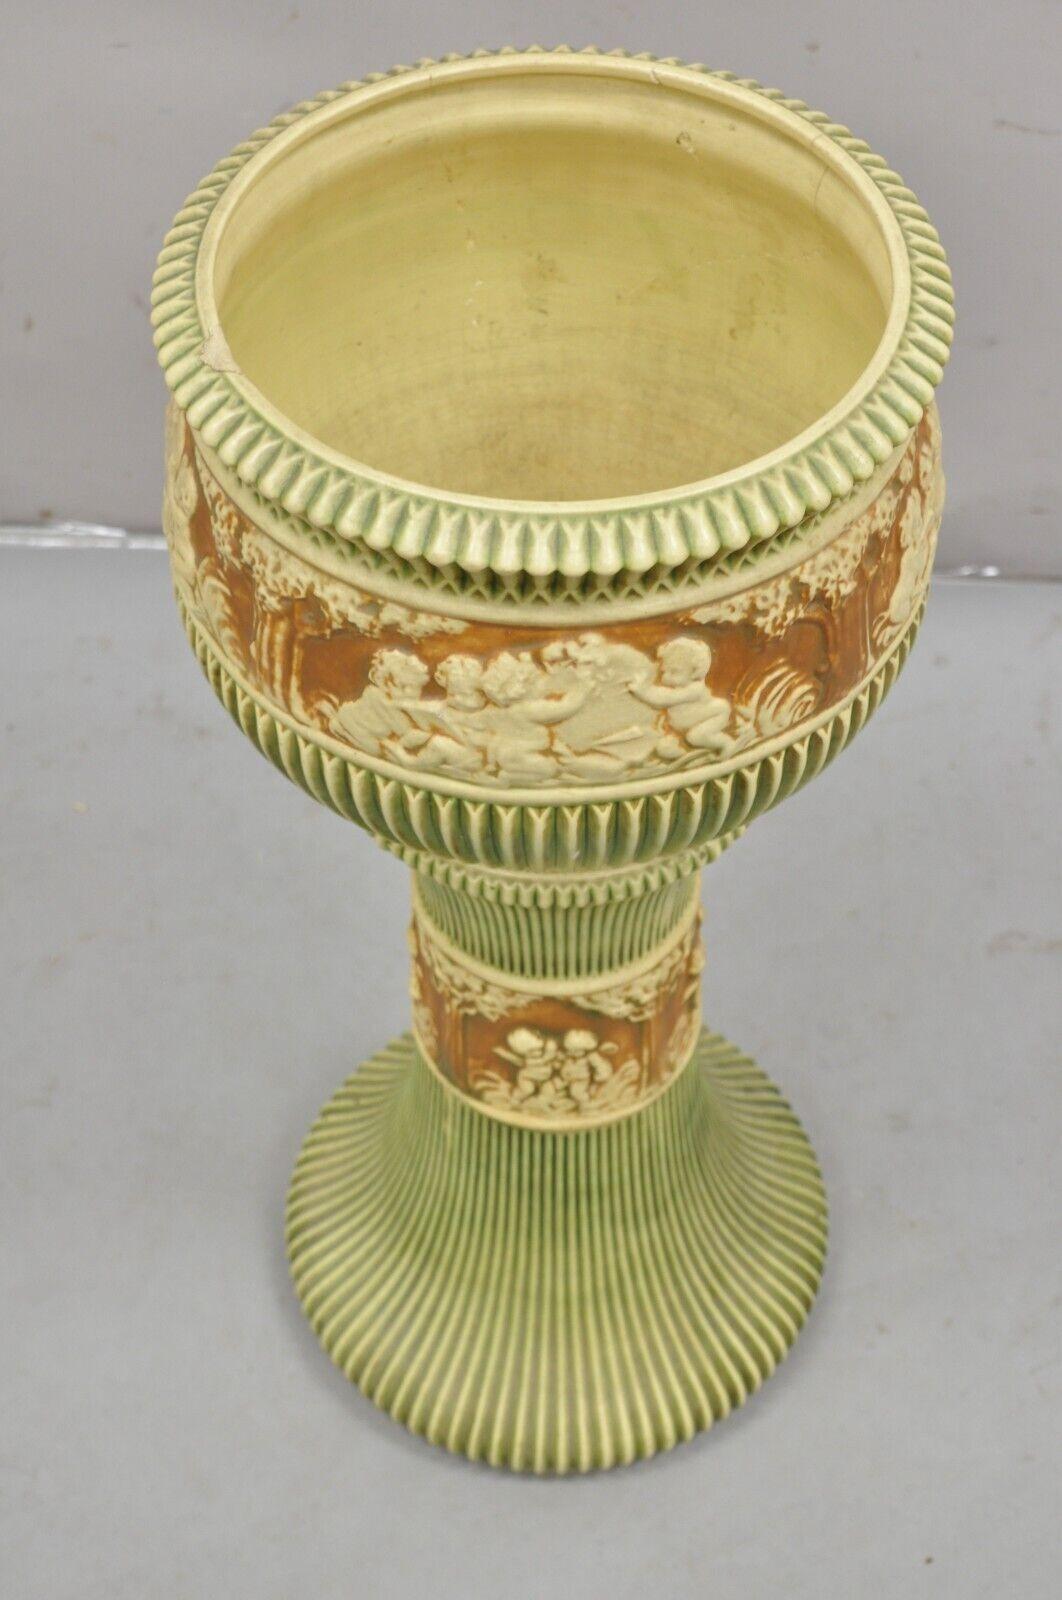 Antique Roseville Donatello Cherubs Art Pottery Jardiniere & Pedestal Flower Pot Set - 2 Pc Set. Circa Early 1900s. Dimensions : 29